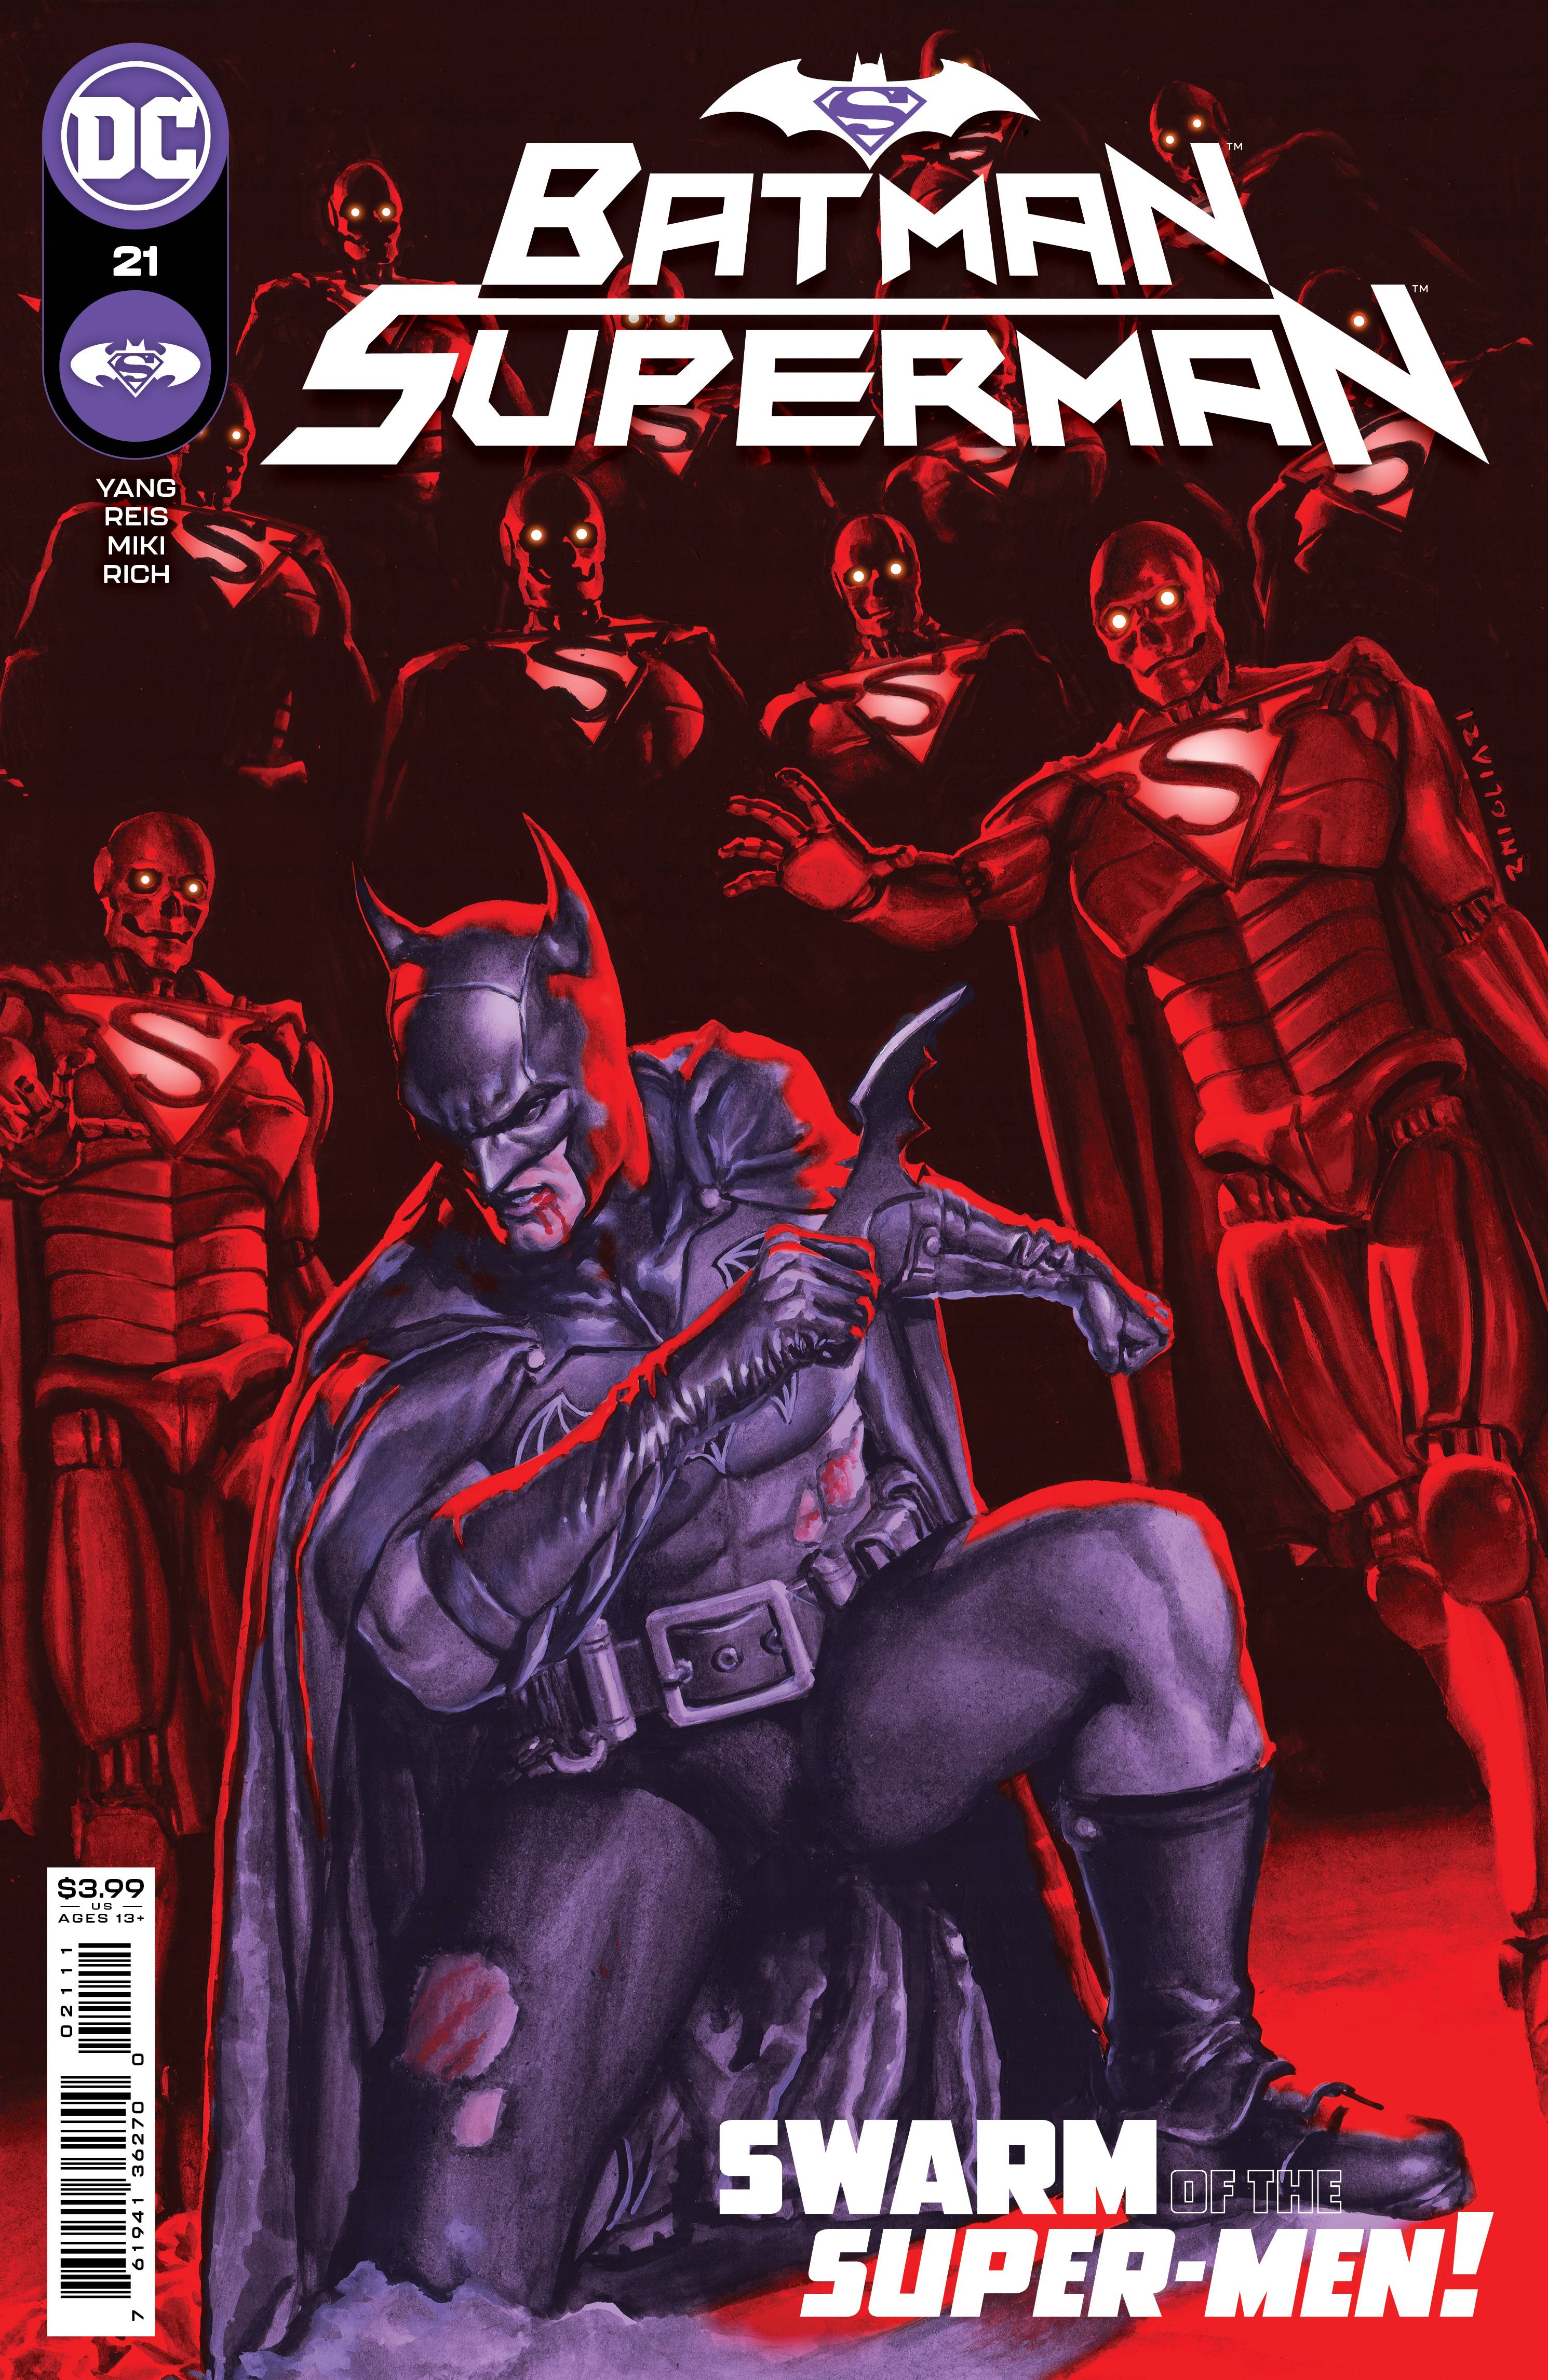 BATMAN SUPERMAN #21 CVR A